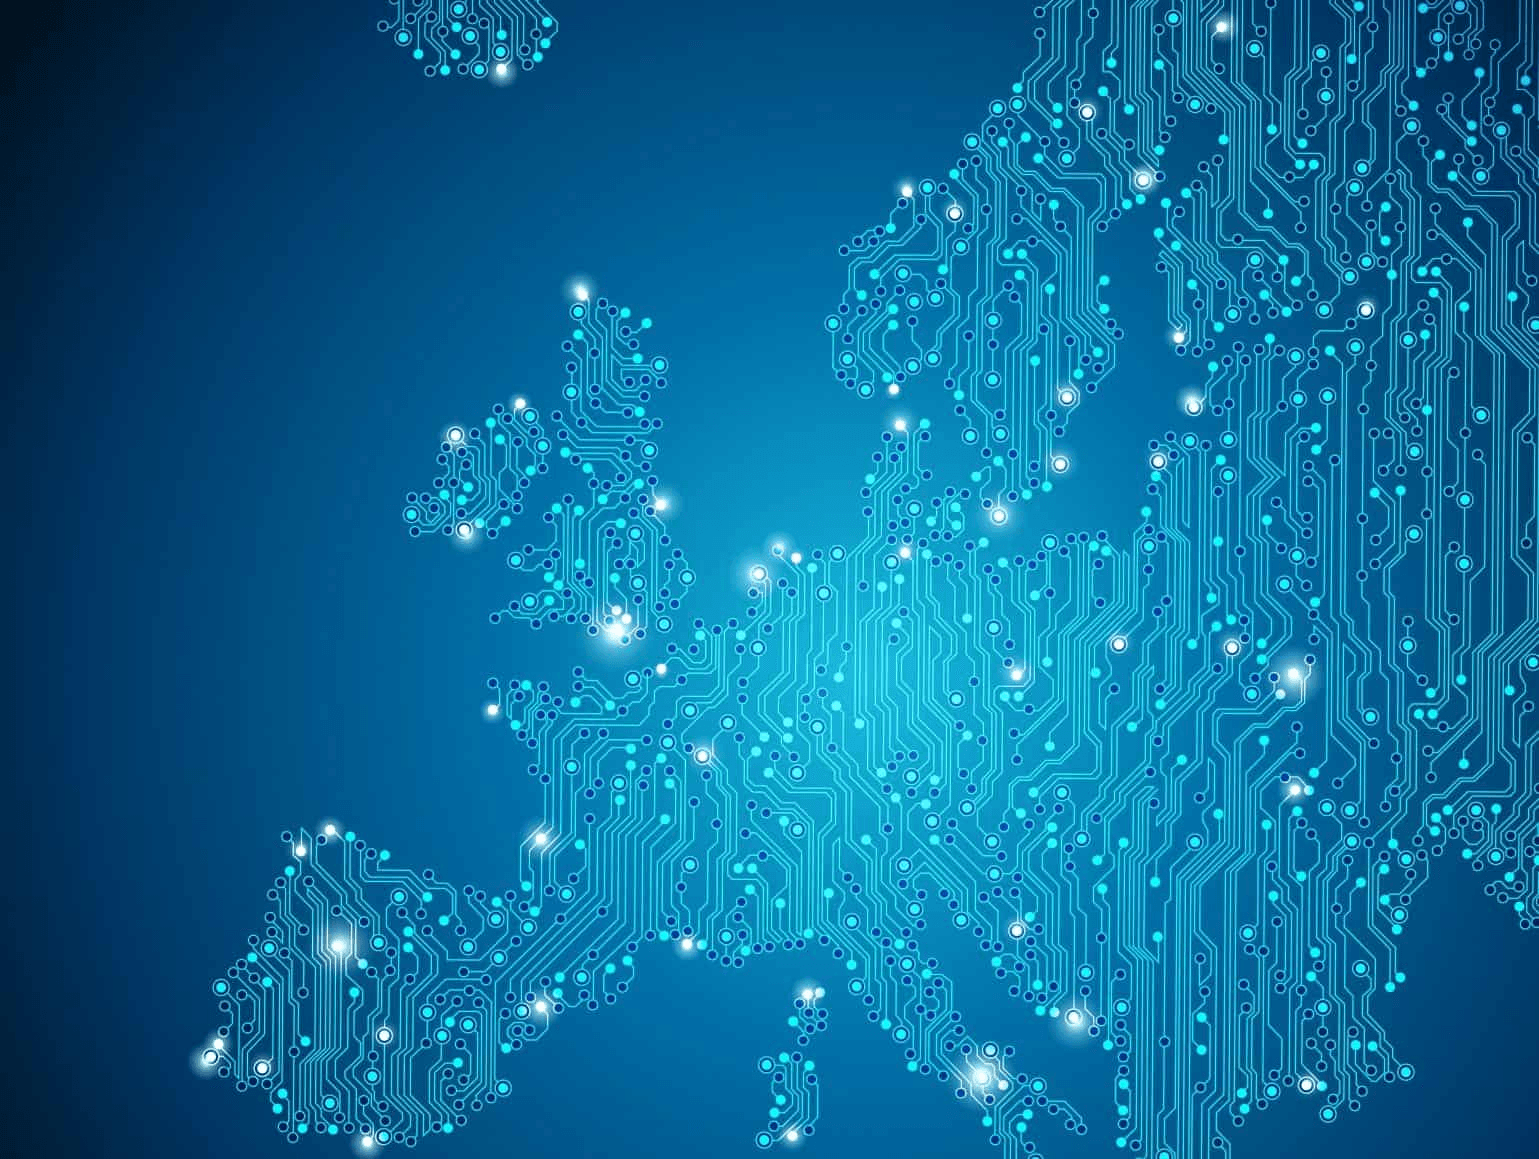 A digital blue circuit board design resembling a map of Europe.